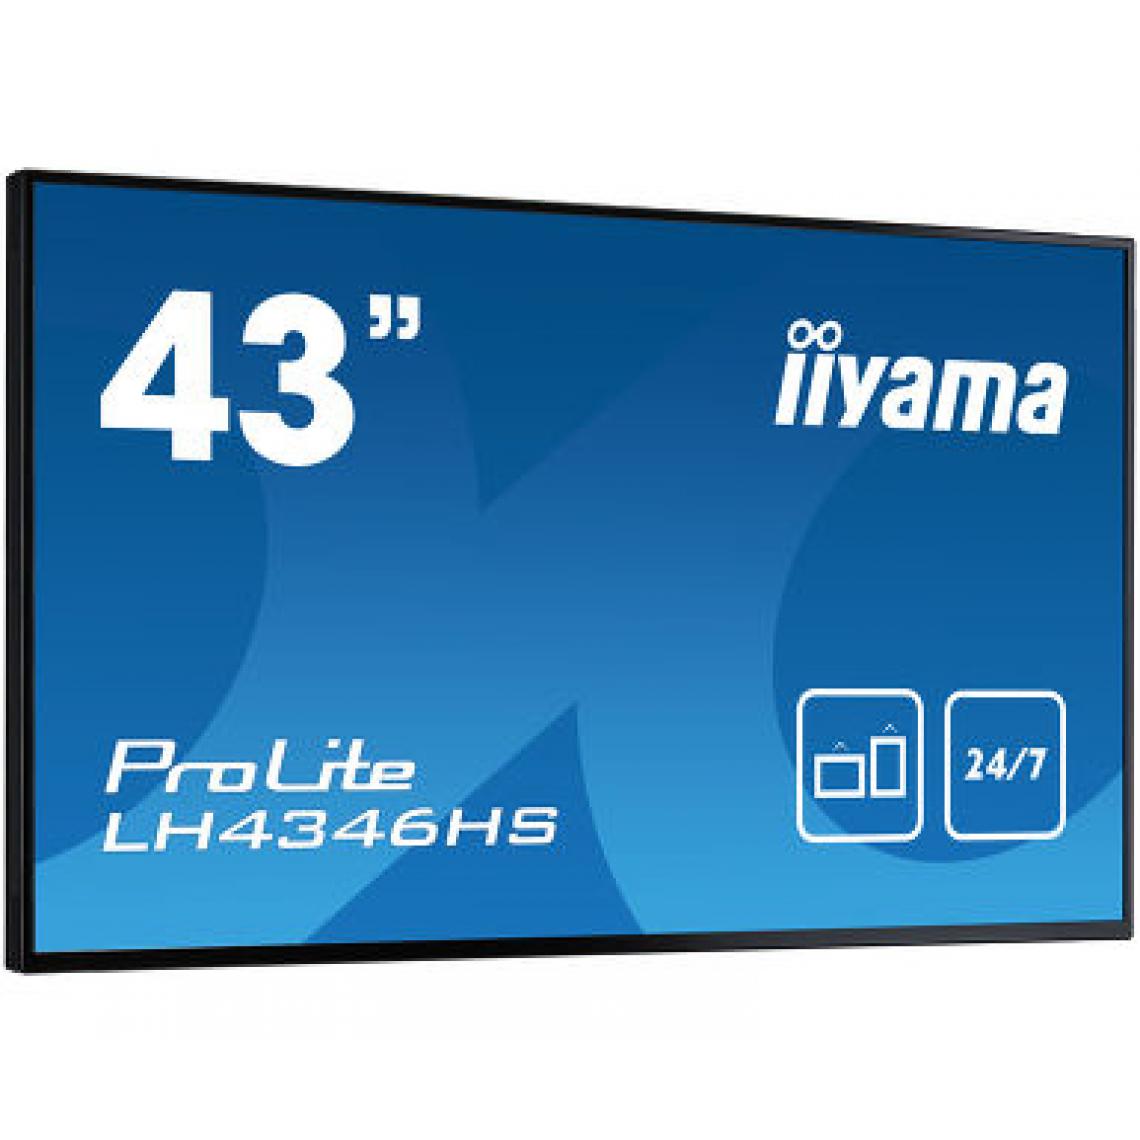 Iiyama - Ecran 43 pouces Full HD ProLite LH4346HS-B1 Android OS interactif intégré - Moniteur PC